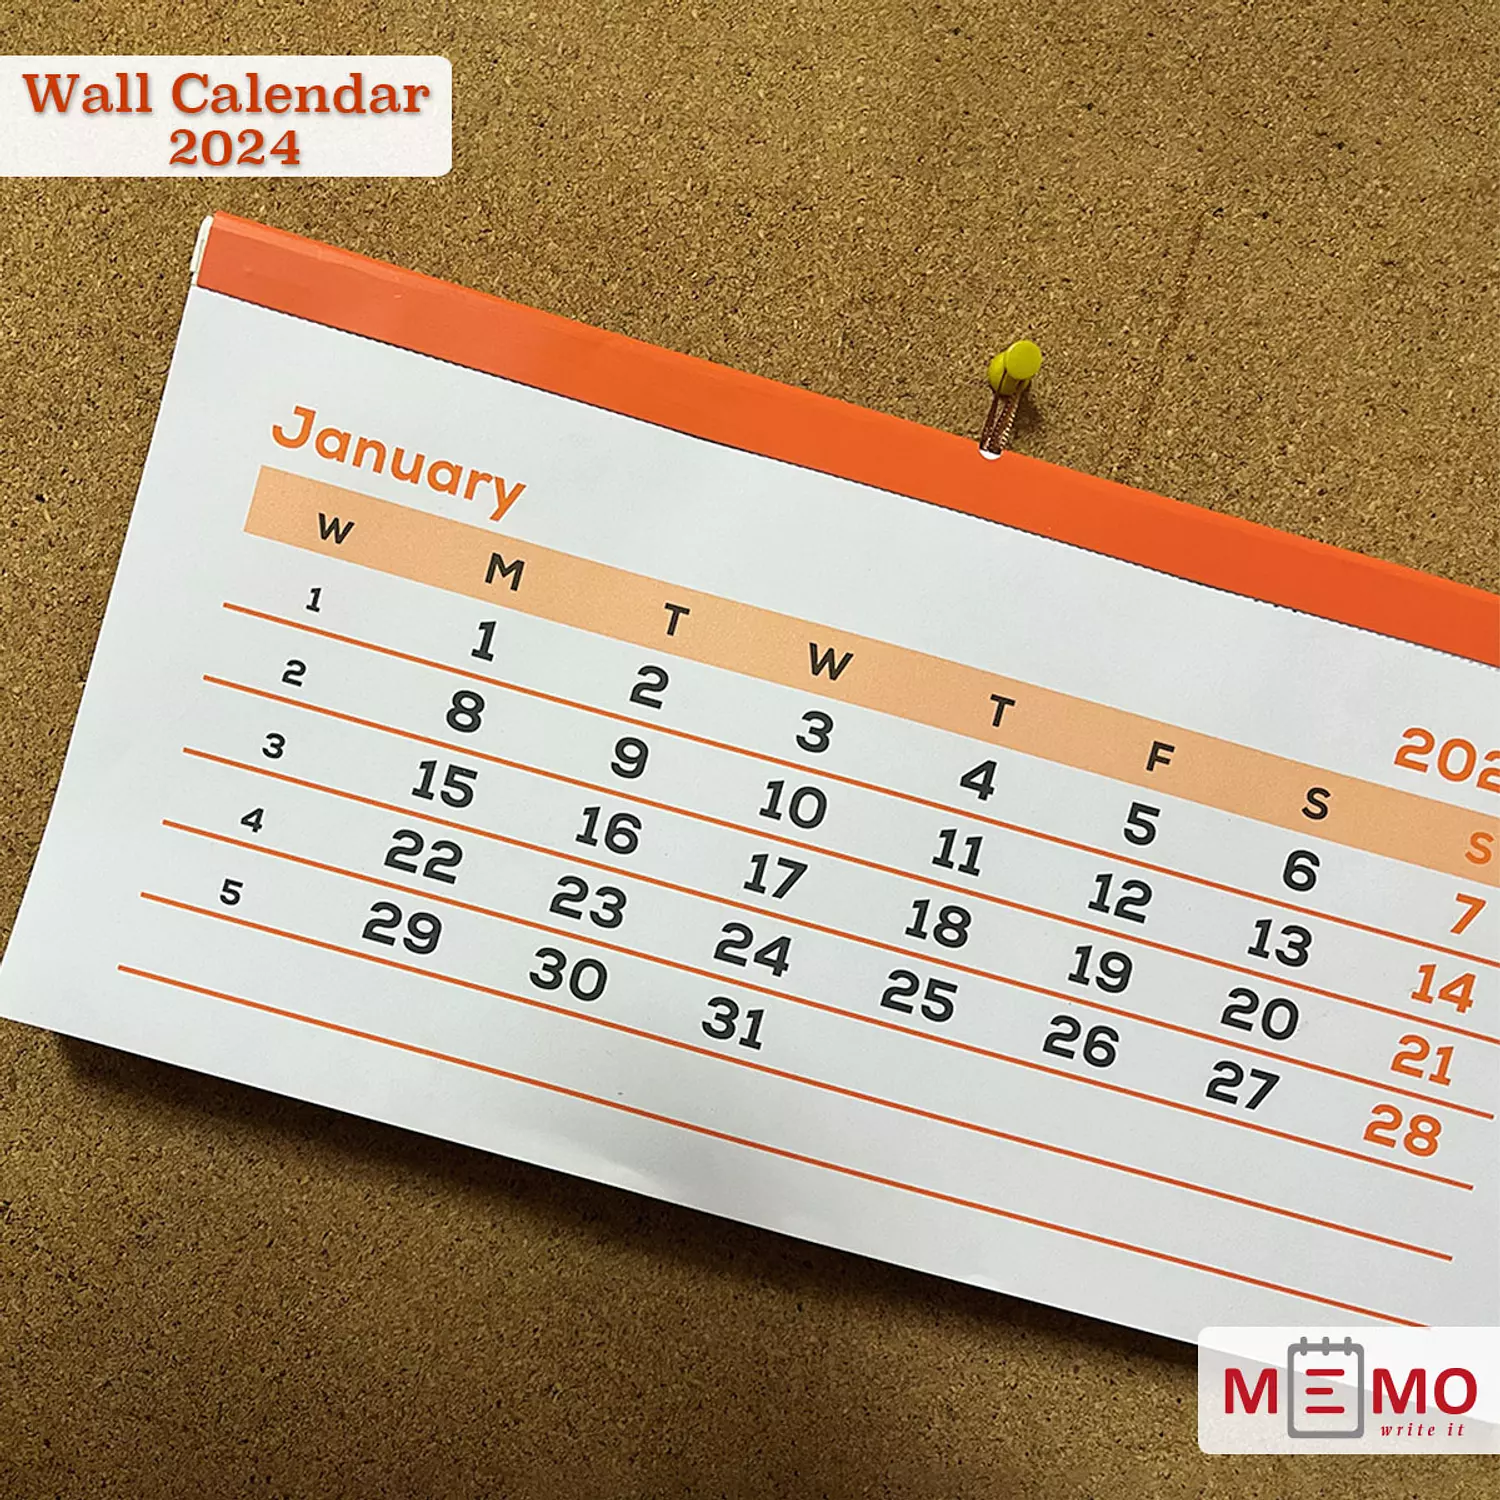 Memo Wall calendar 2024 2